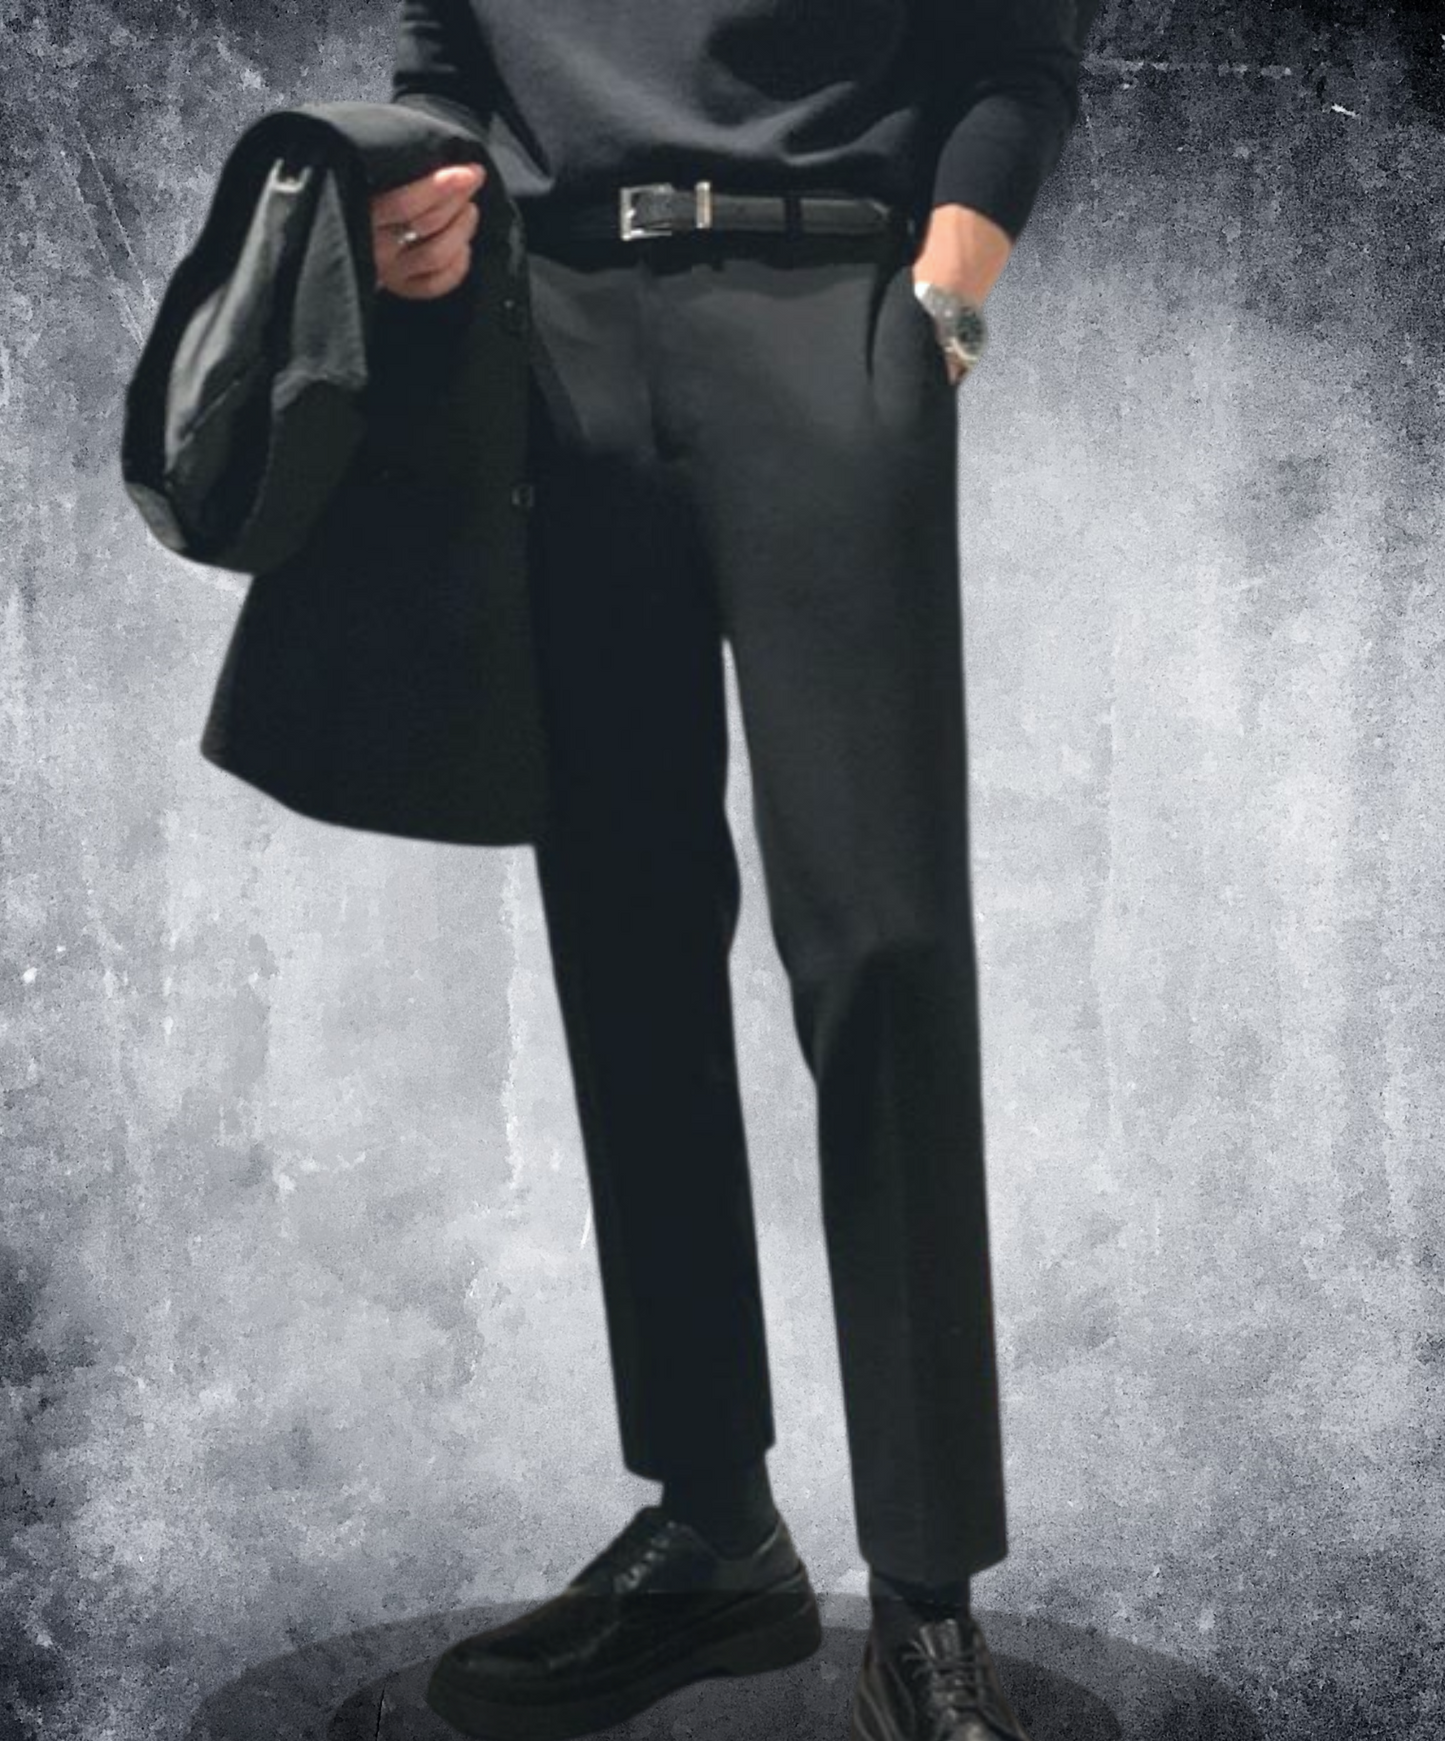 【style8】dark mode outfit set EN824（cardigan + pants set）